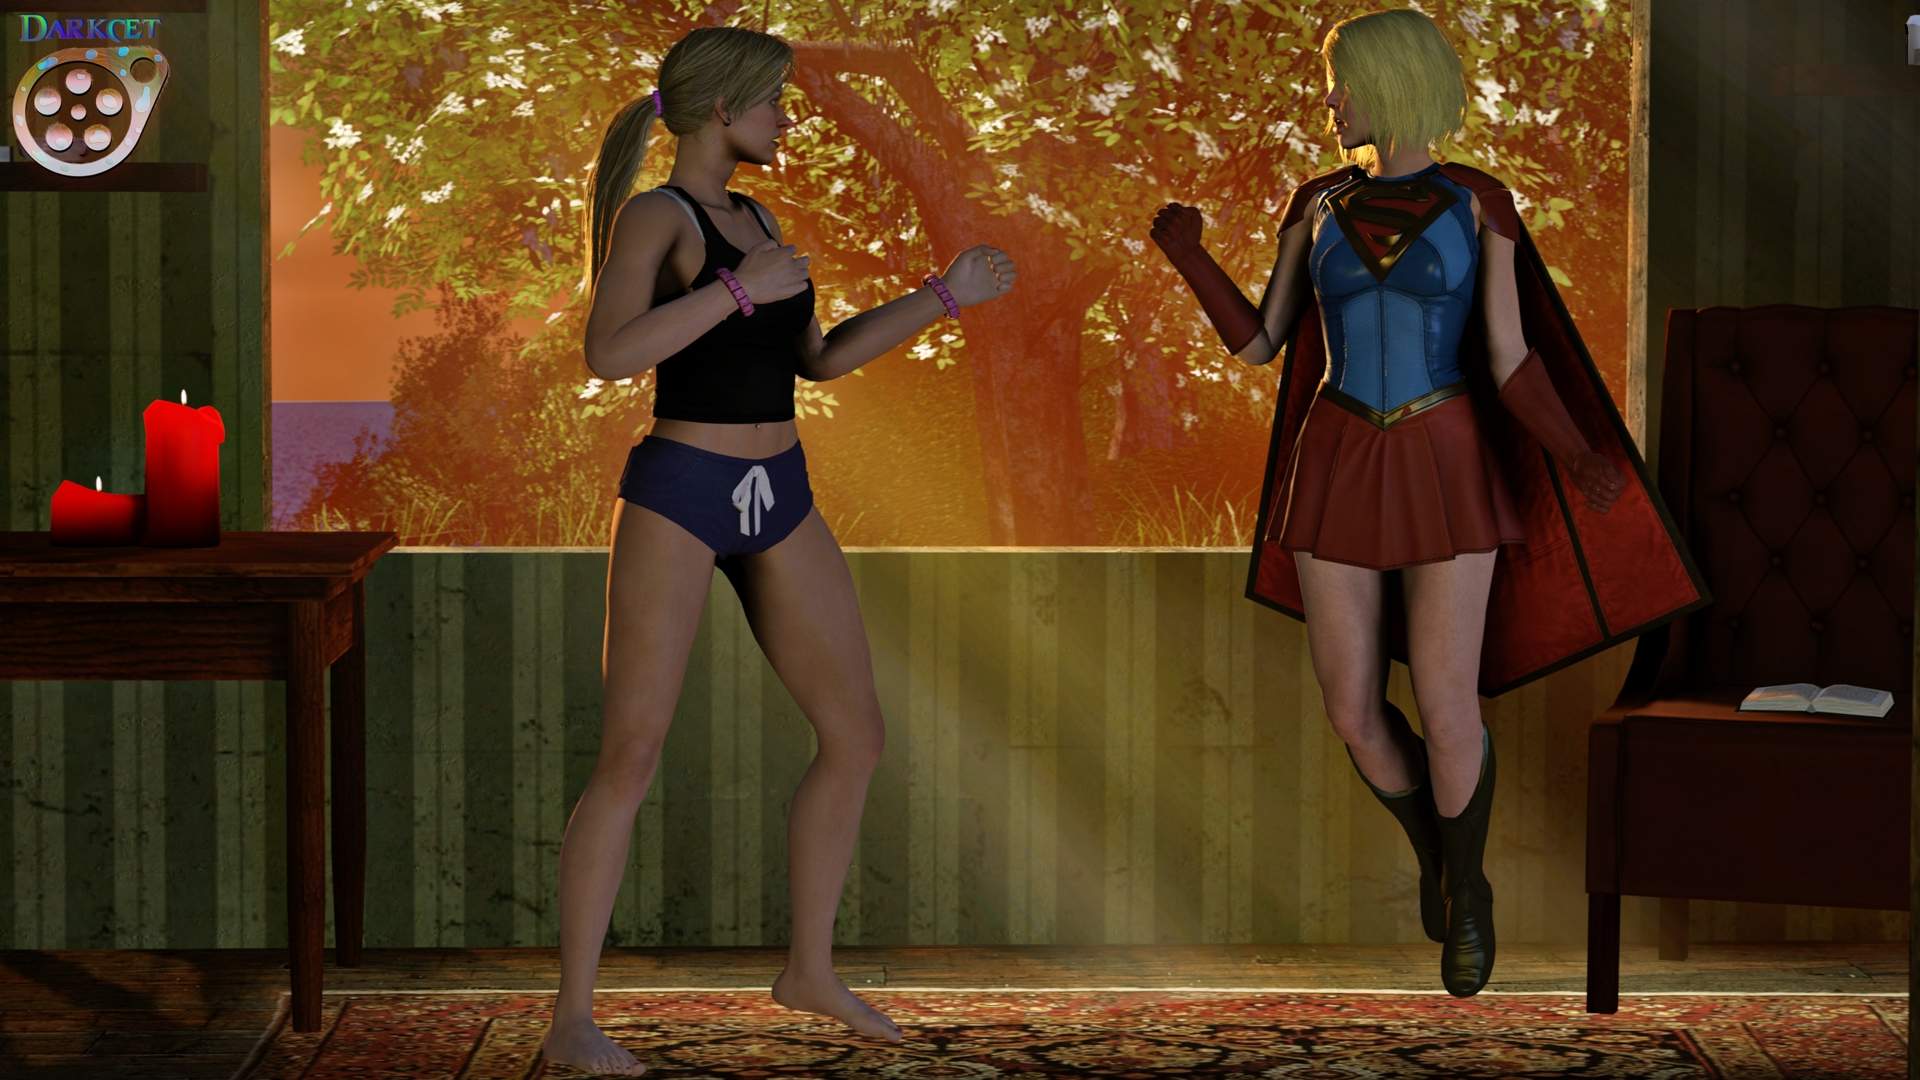 SureFap xxx porno Crossover - [Darkcet] - Cassie vs Supergirl